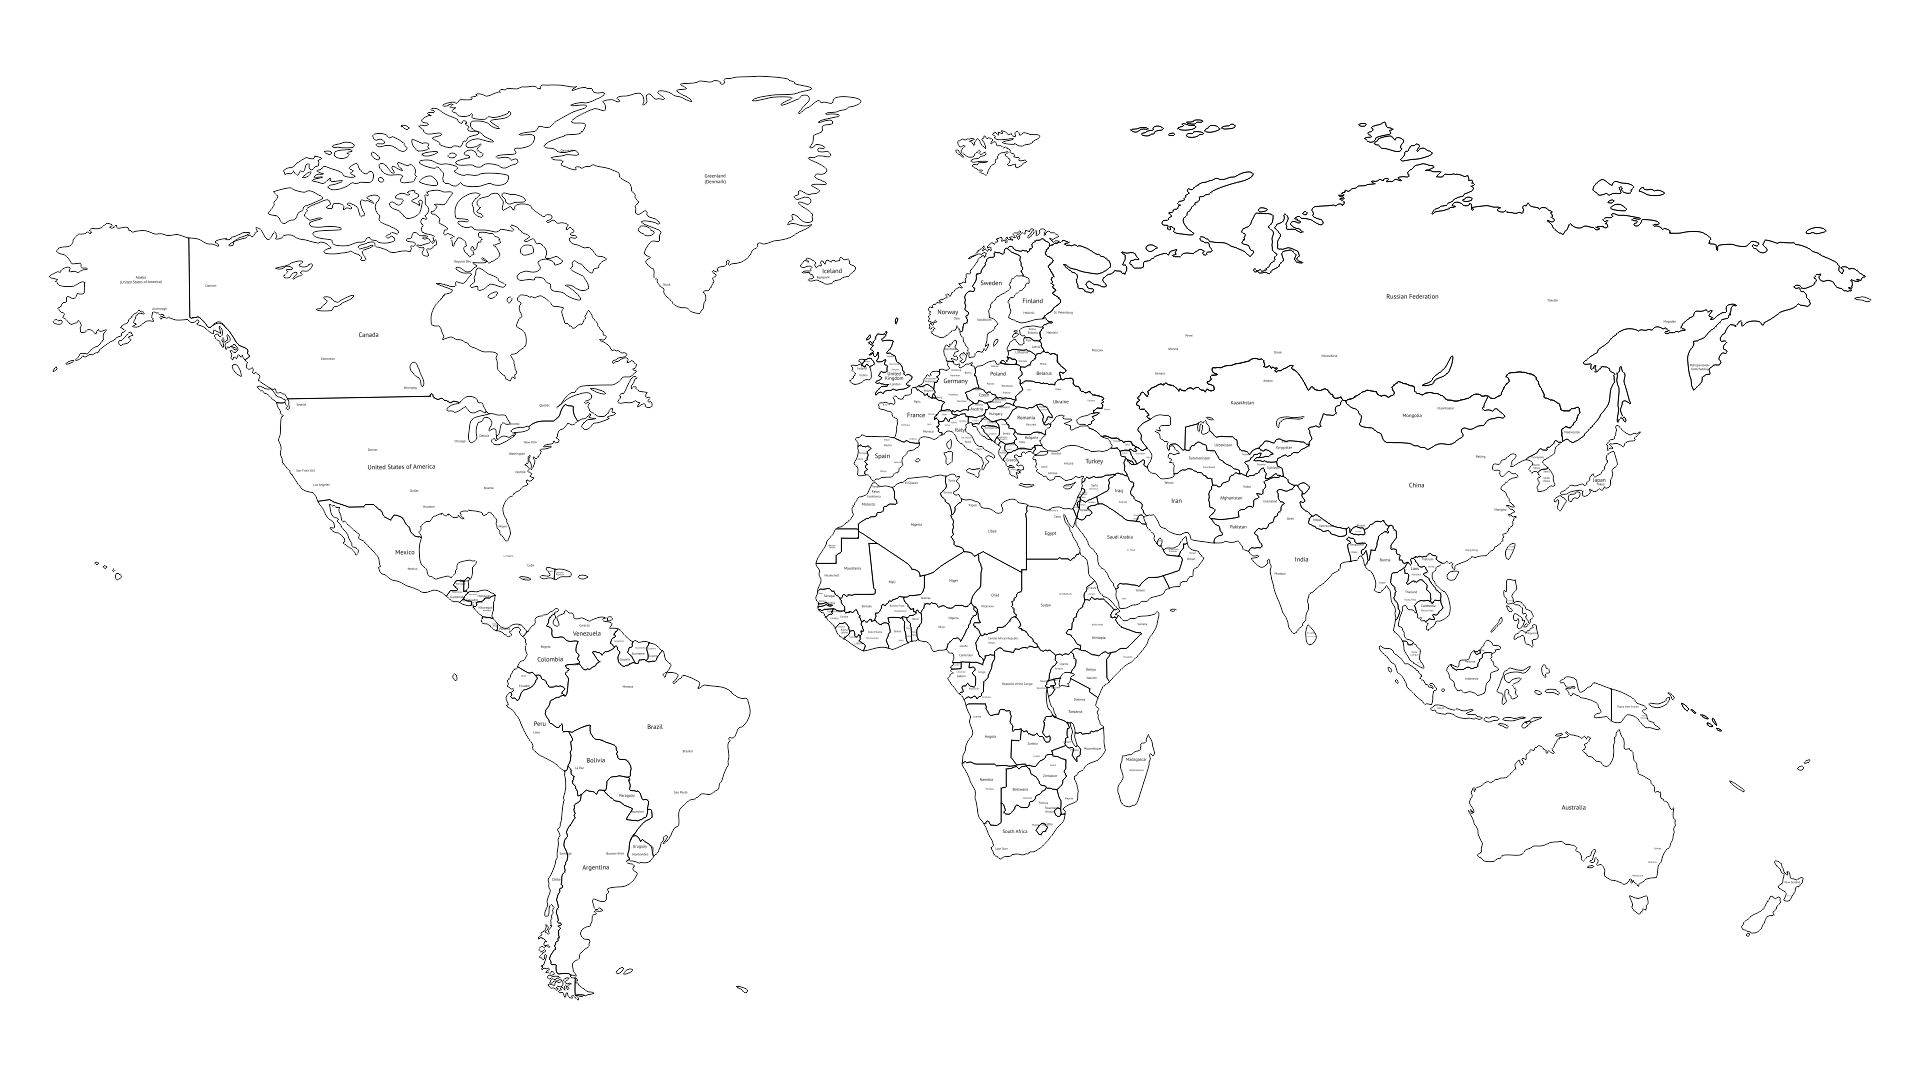 World Map Template